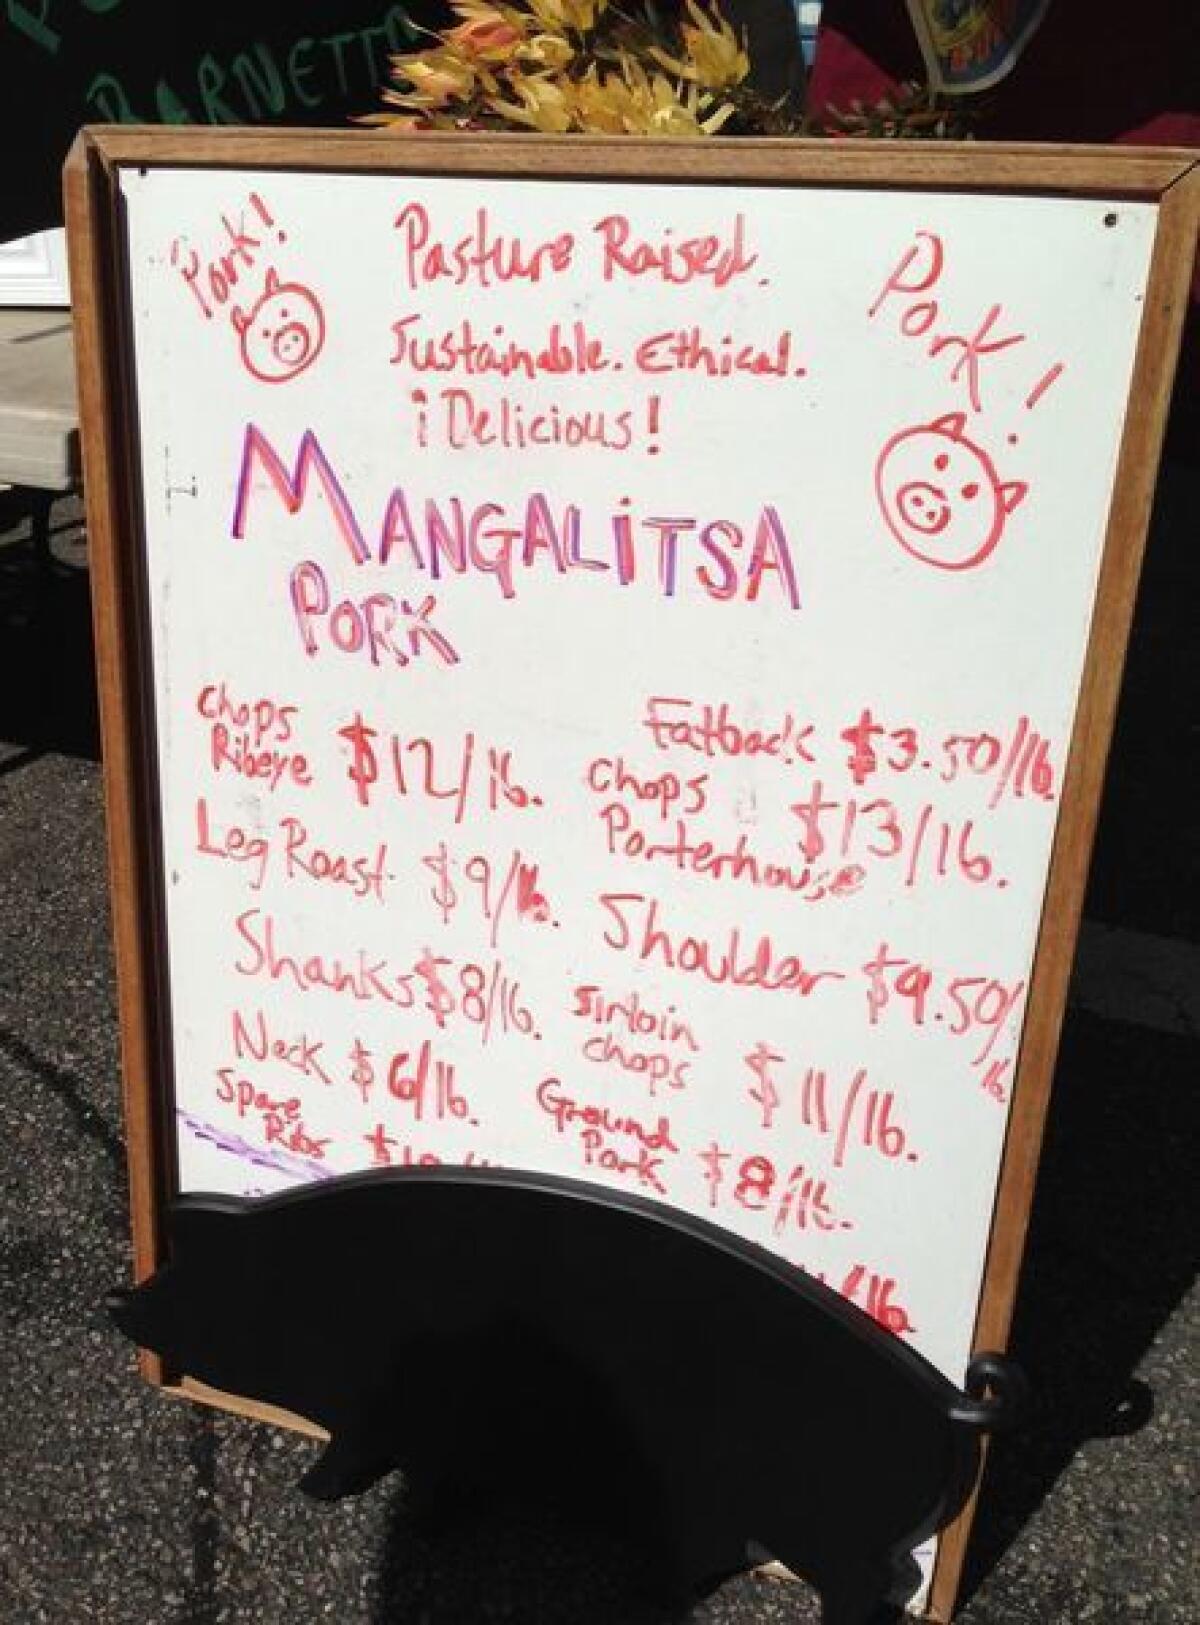 New at the Santa Monica Farmers Market: Mangalitsa pork from Peads & Barnetts.